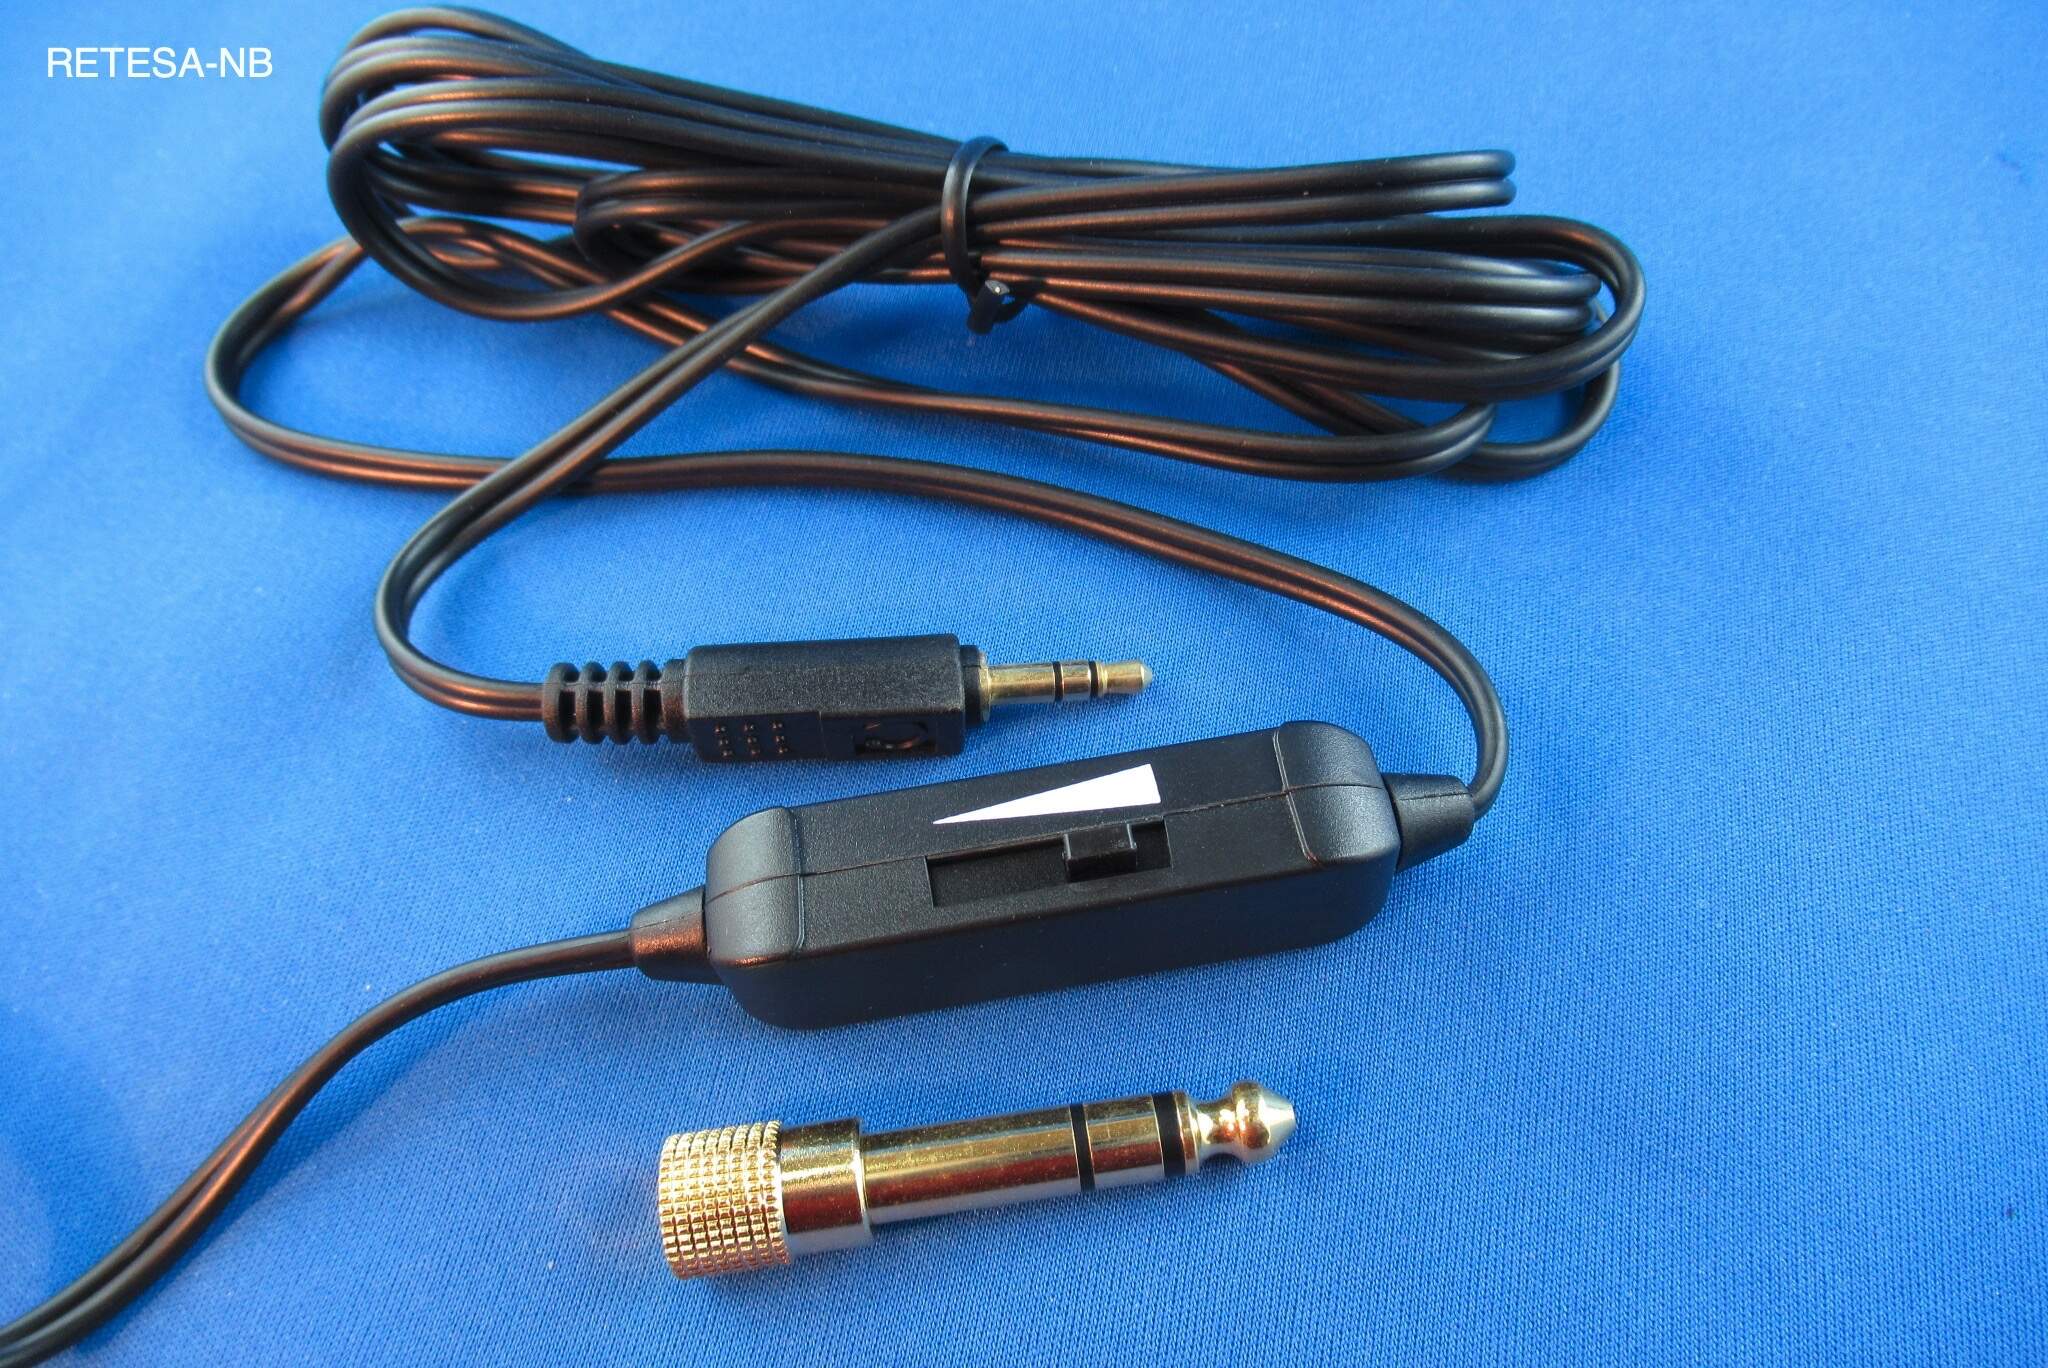 PC-Stereo-Kopfhörer Labtec C-110